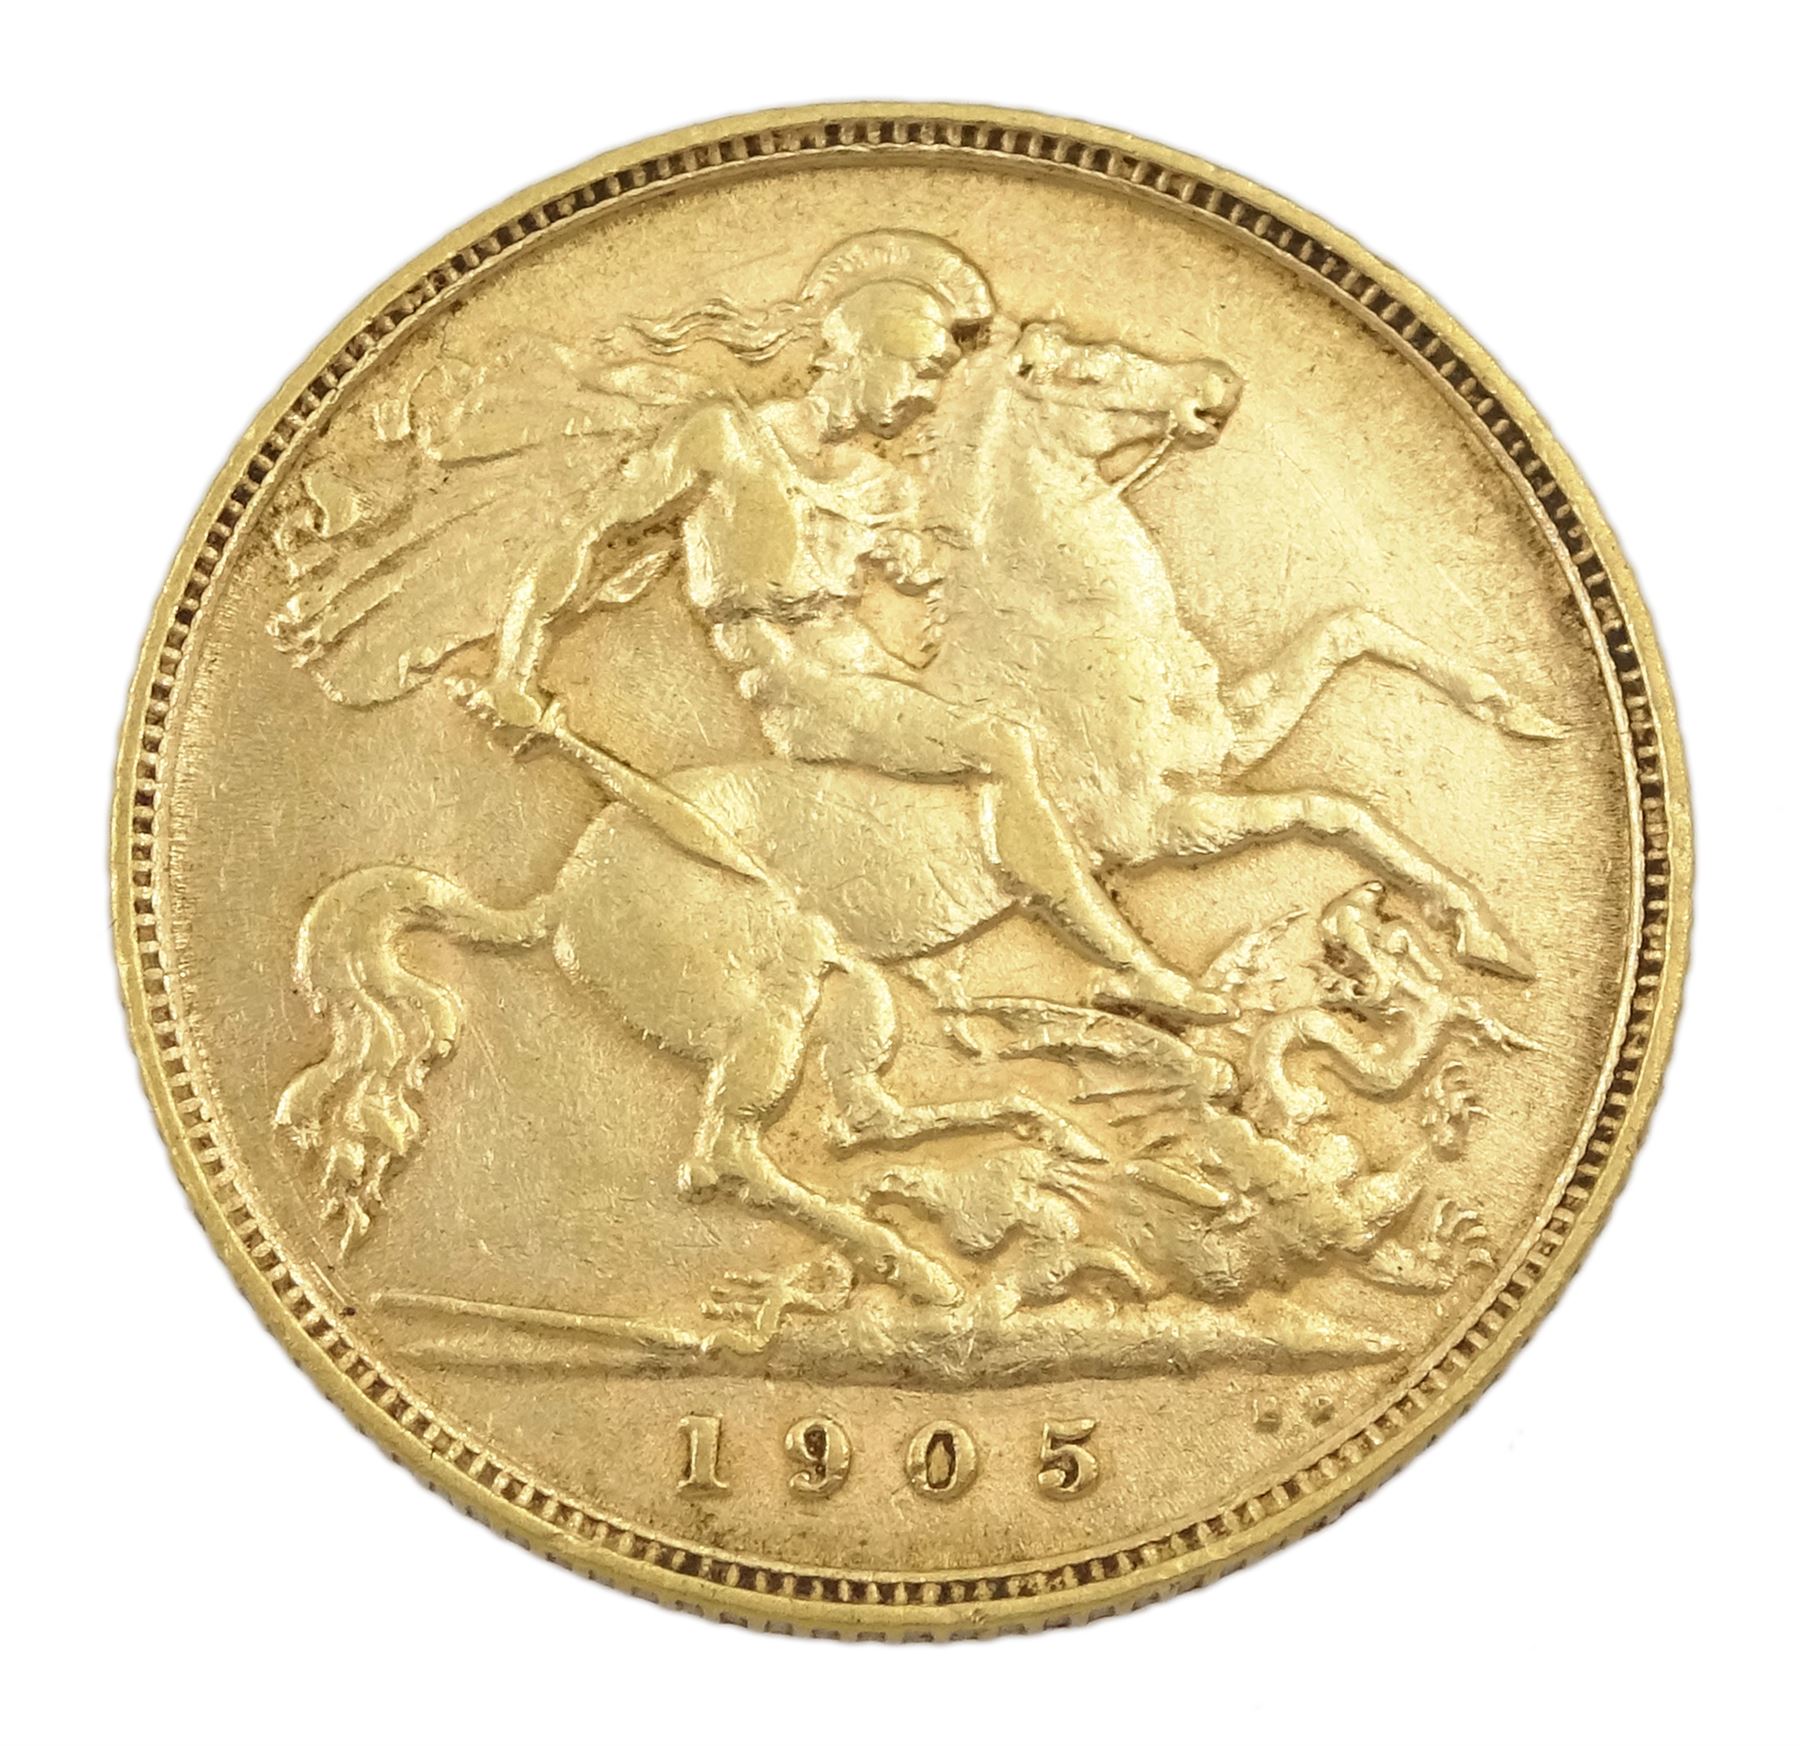 King Edward VII 1905 gold half sovereign coin - Image 2 of 2